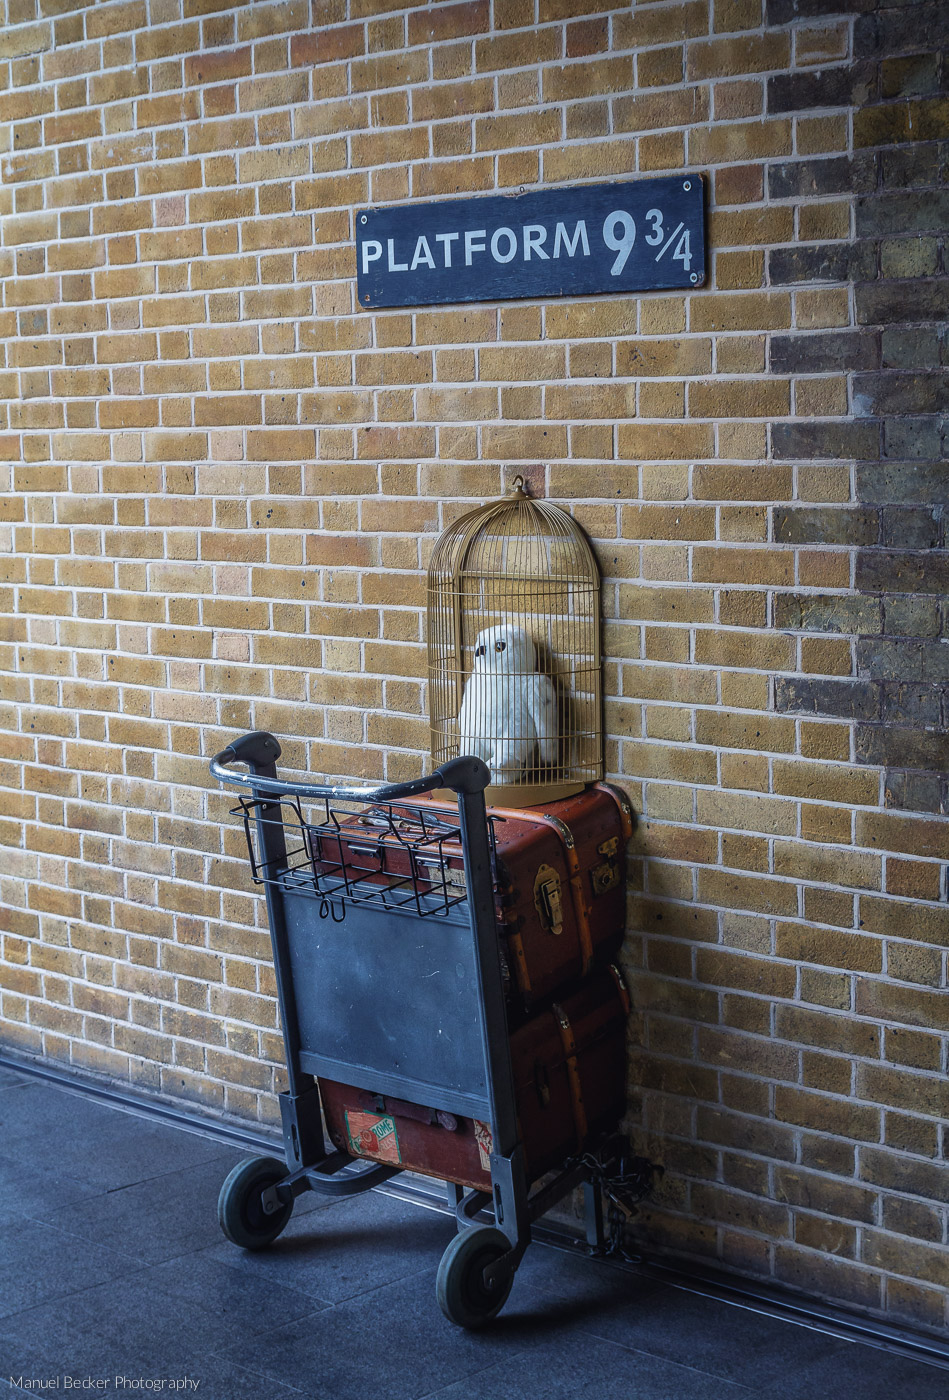 platform-9-3-4-of-harry-potter-kings-cross-london-united-kingdom_l.jpeg